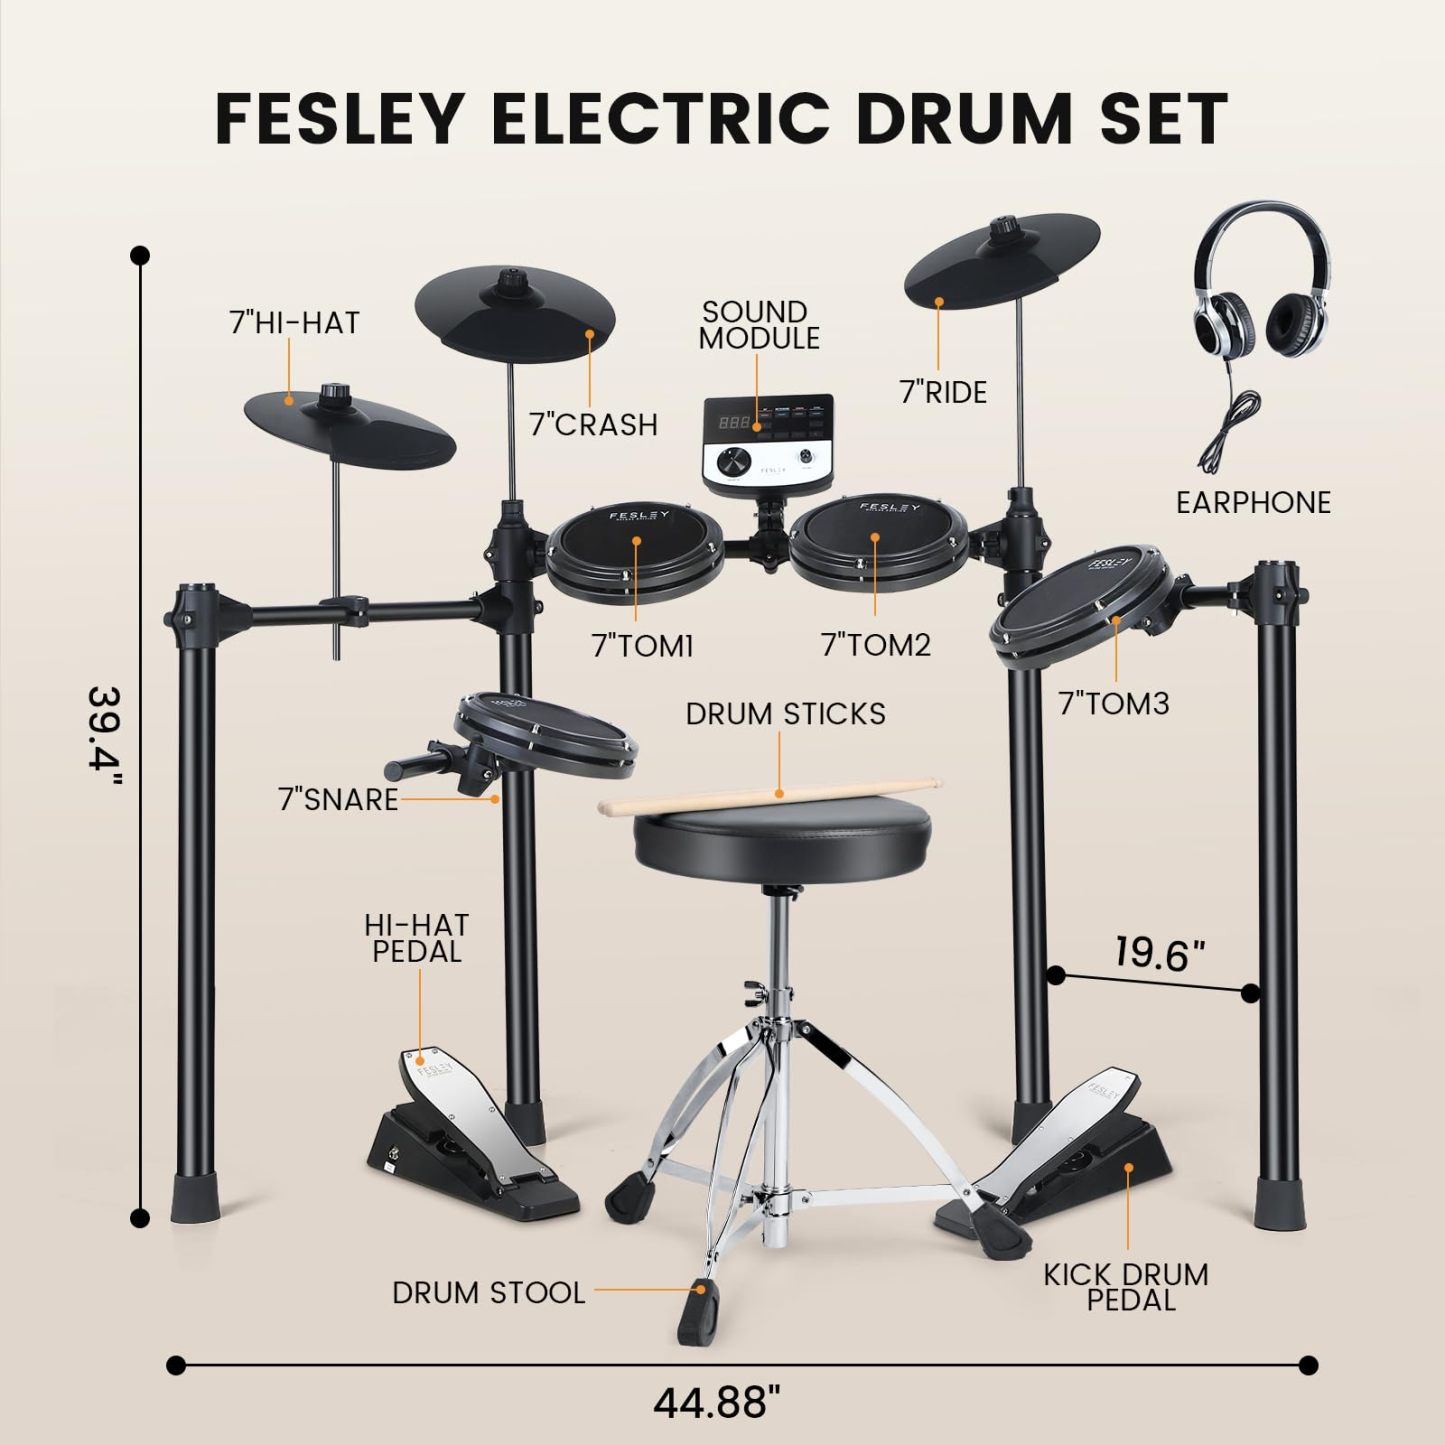 Fesley FED200 Electric Drum Set